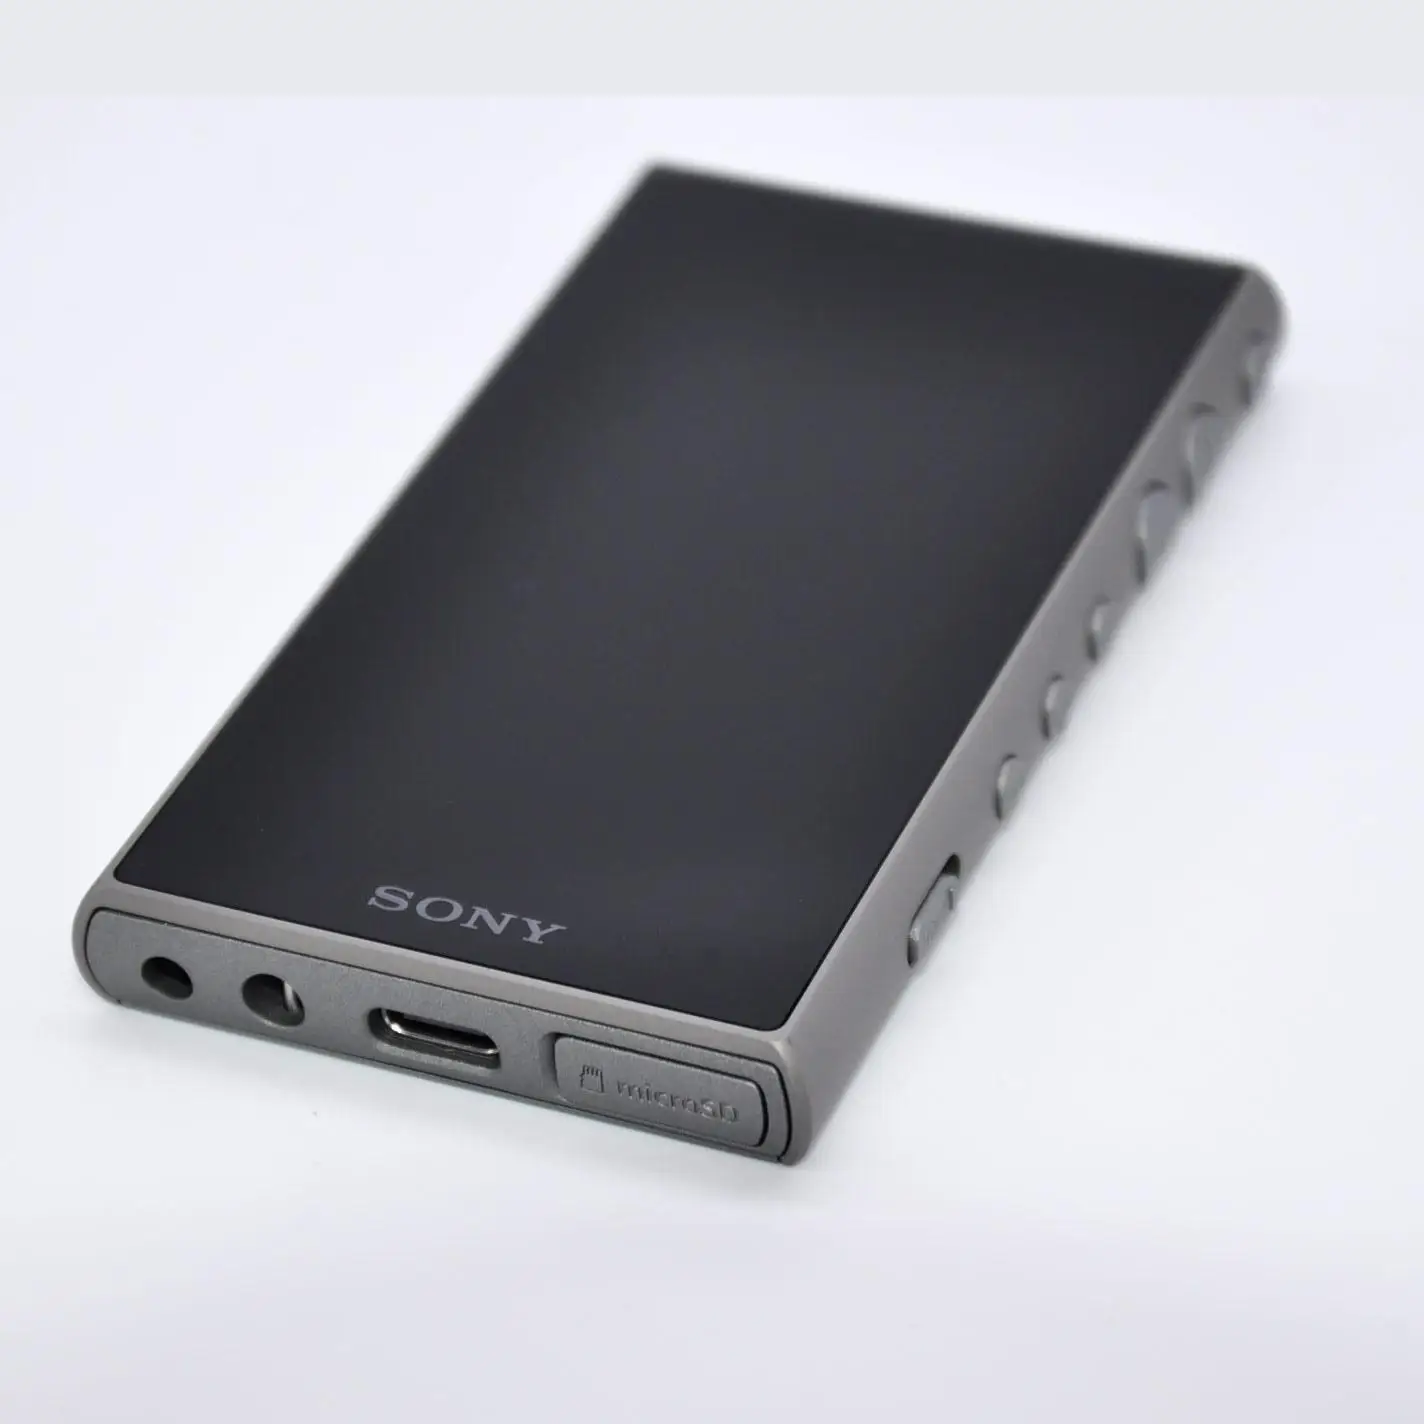 Б/у Sony Walkman NW A105 высокого разрешения 16 Гб MP3 плеер (не полное new)|MP3-плееры| |